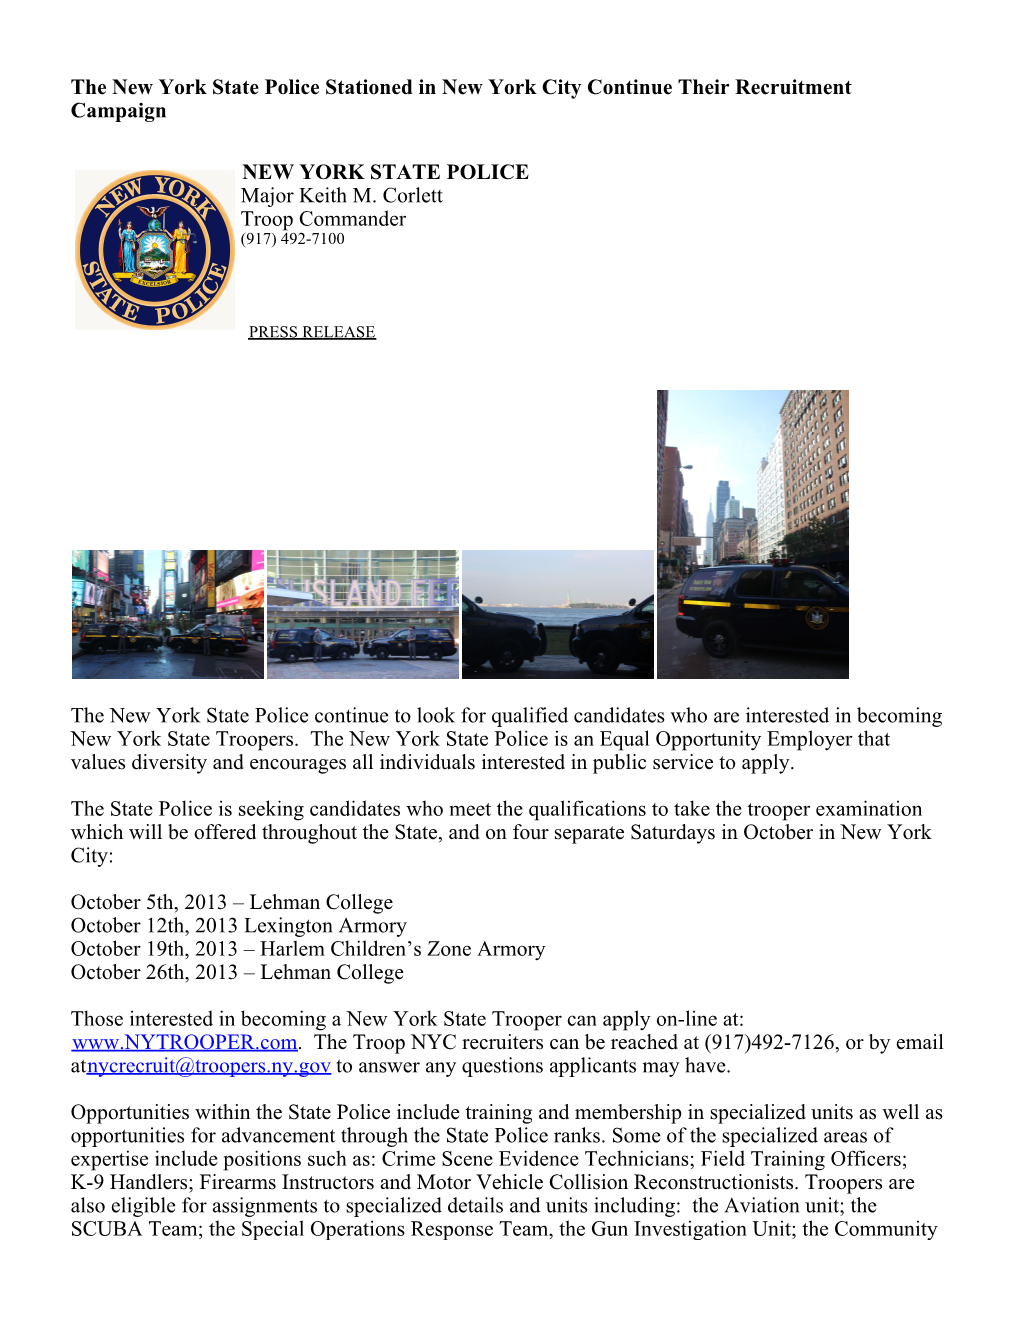 New York State Police Recruitment Press Release